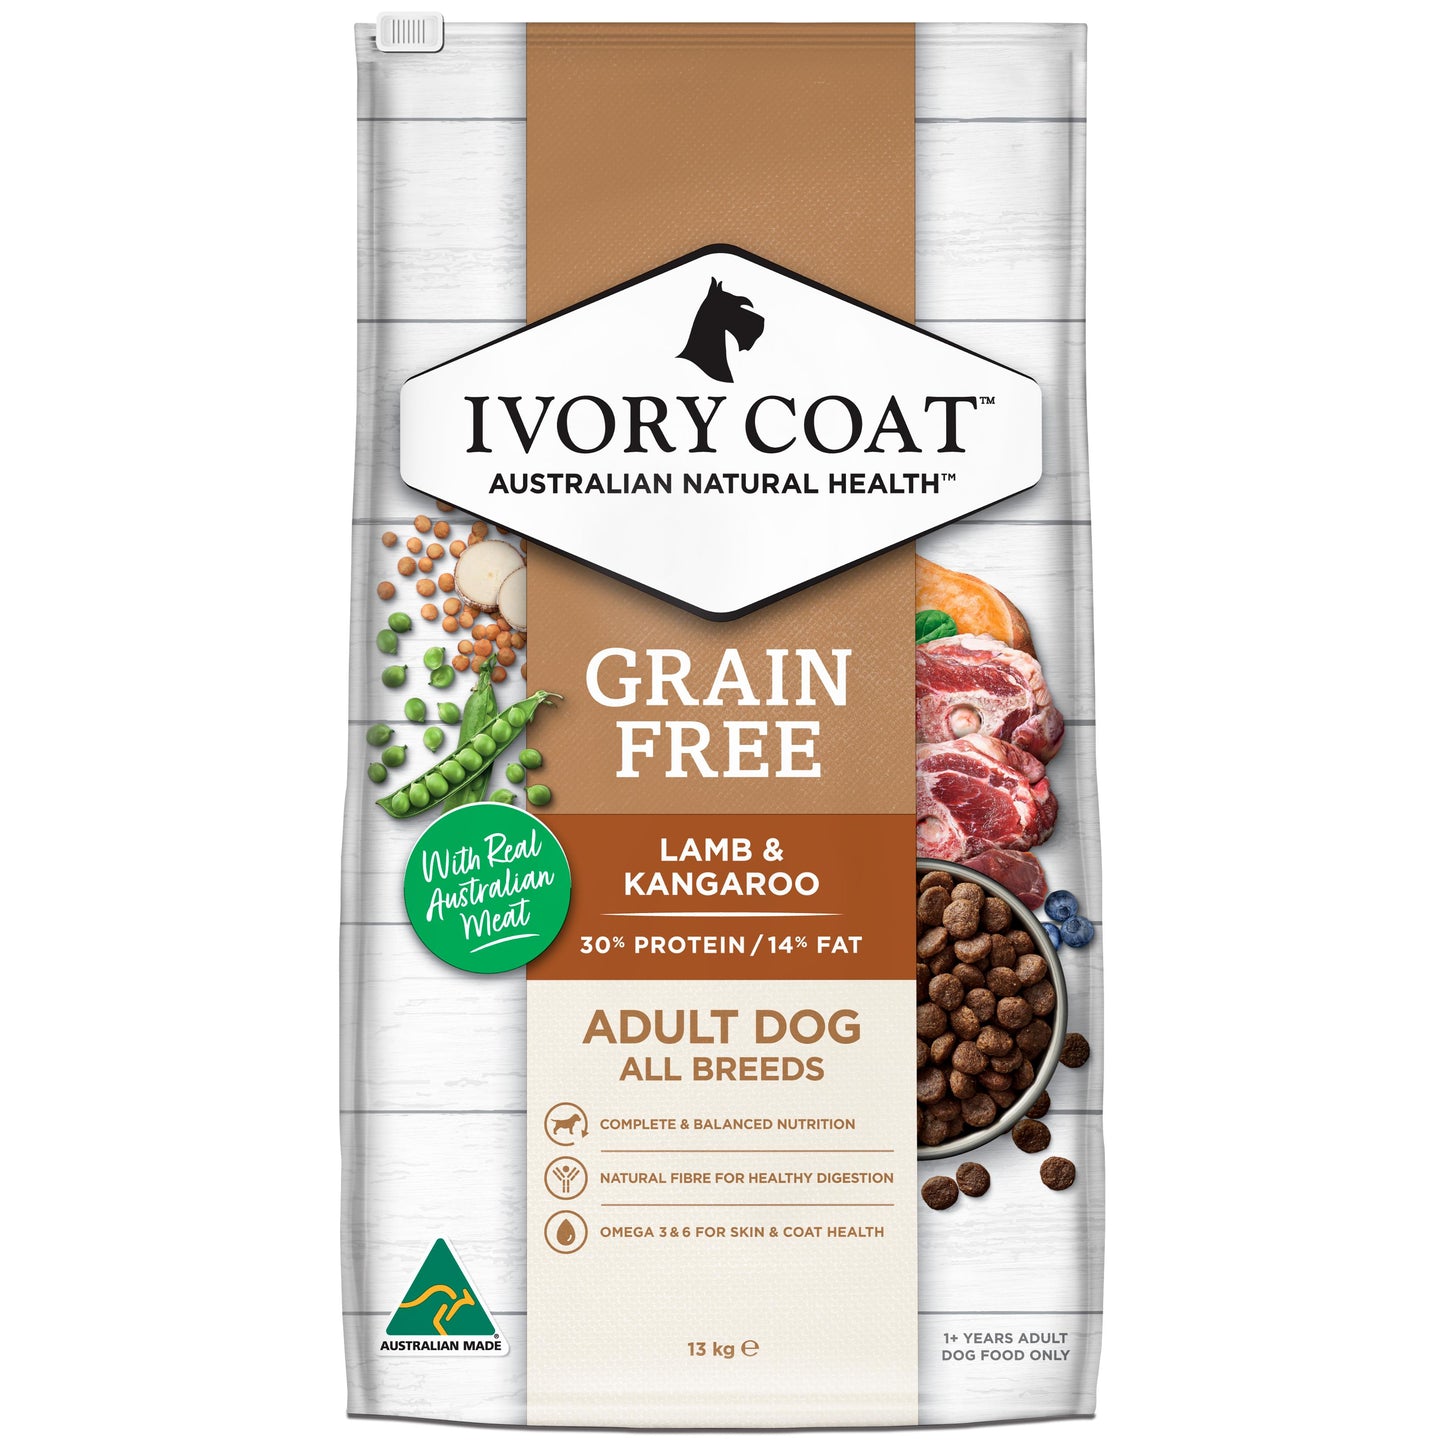 Ivory Coat Grain Free Lamb & Kangaroo Dry Food for Adult Dogs